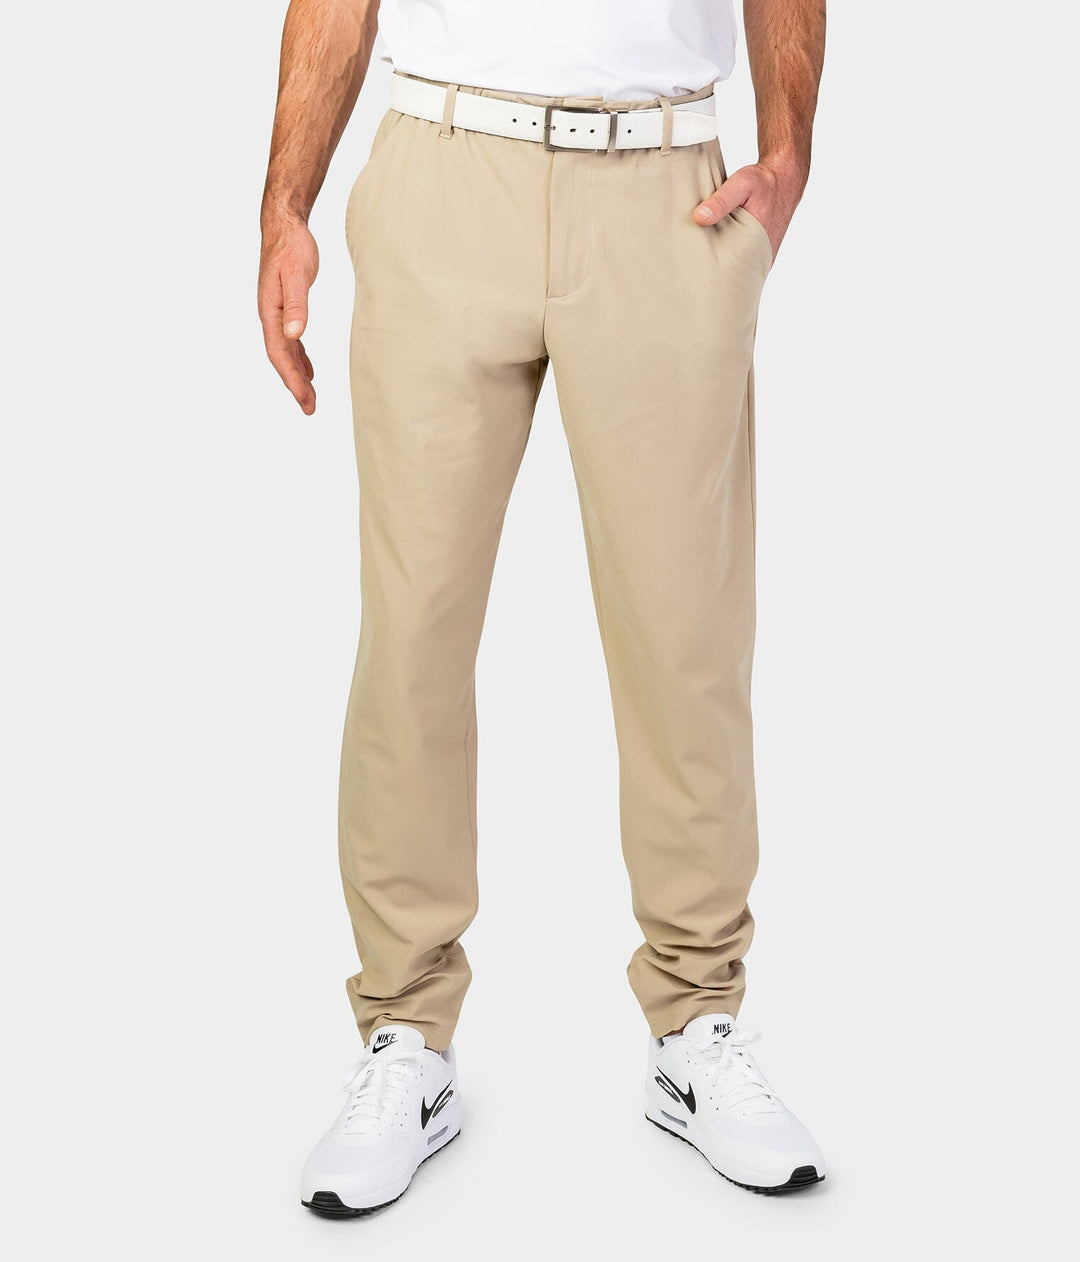 EveryDay Pant 2.0  Everyday pants, Golf pants, Polyester pants